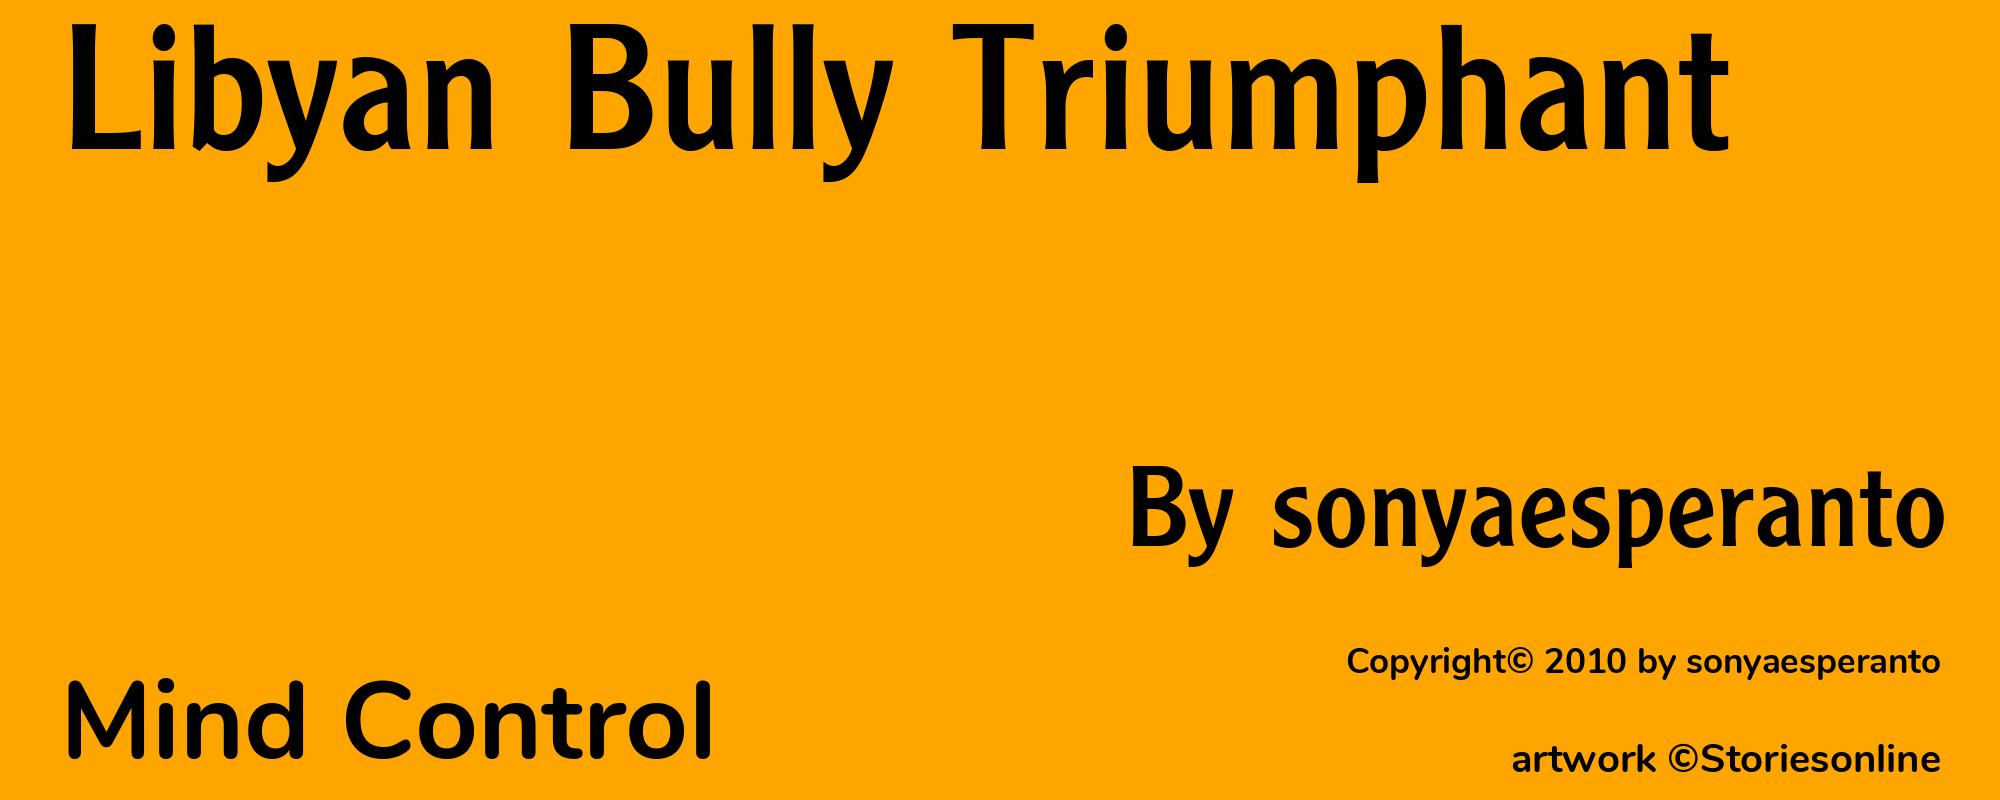 Libyan Bully Triumphant - Cover